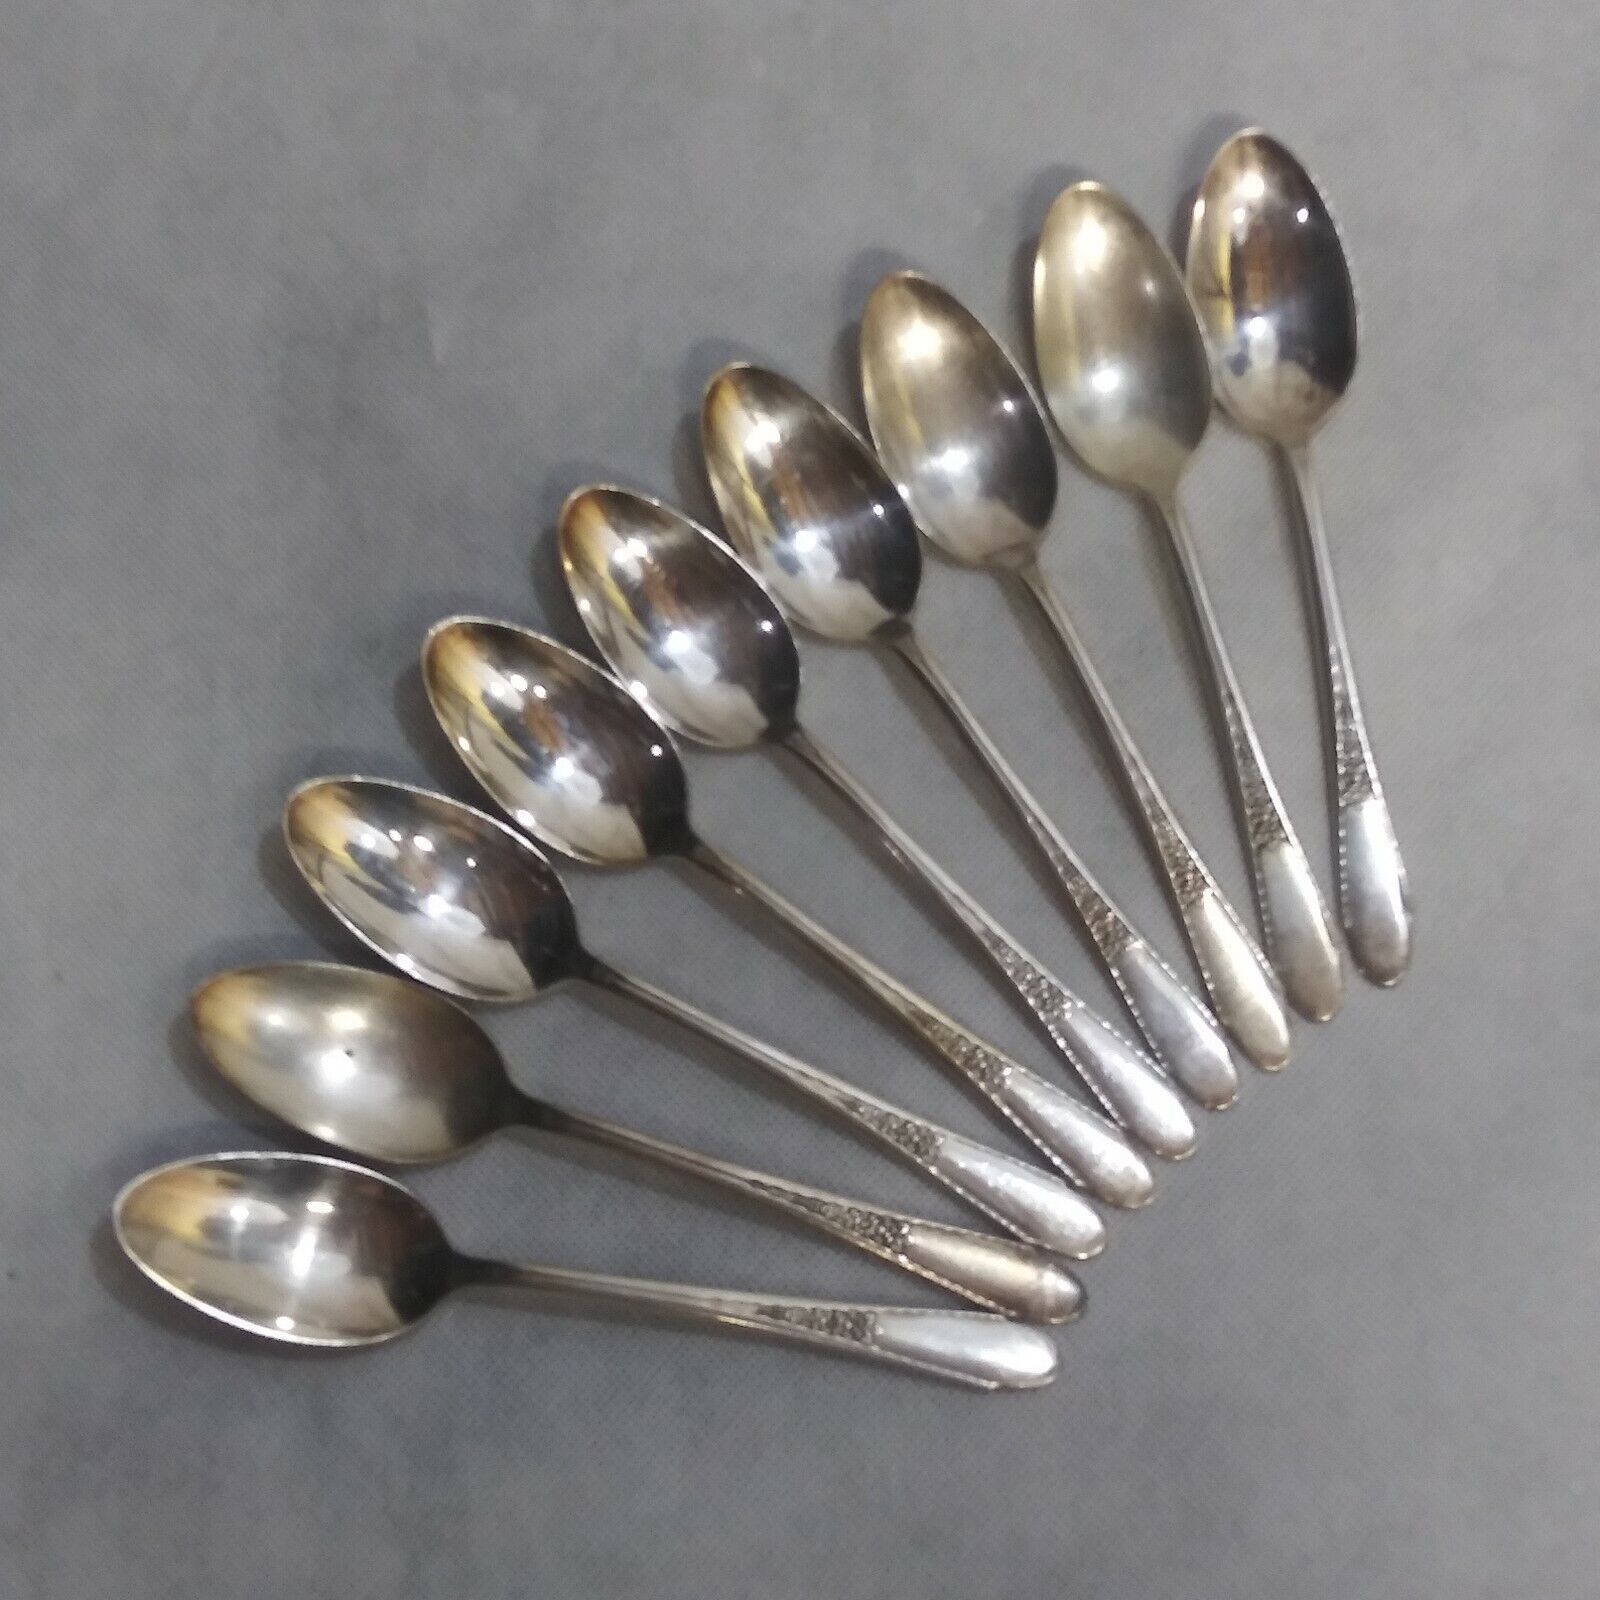 Rogers Gardenia Teaspoons 9 Silver Plated International Silver 1941 - $21.95